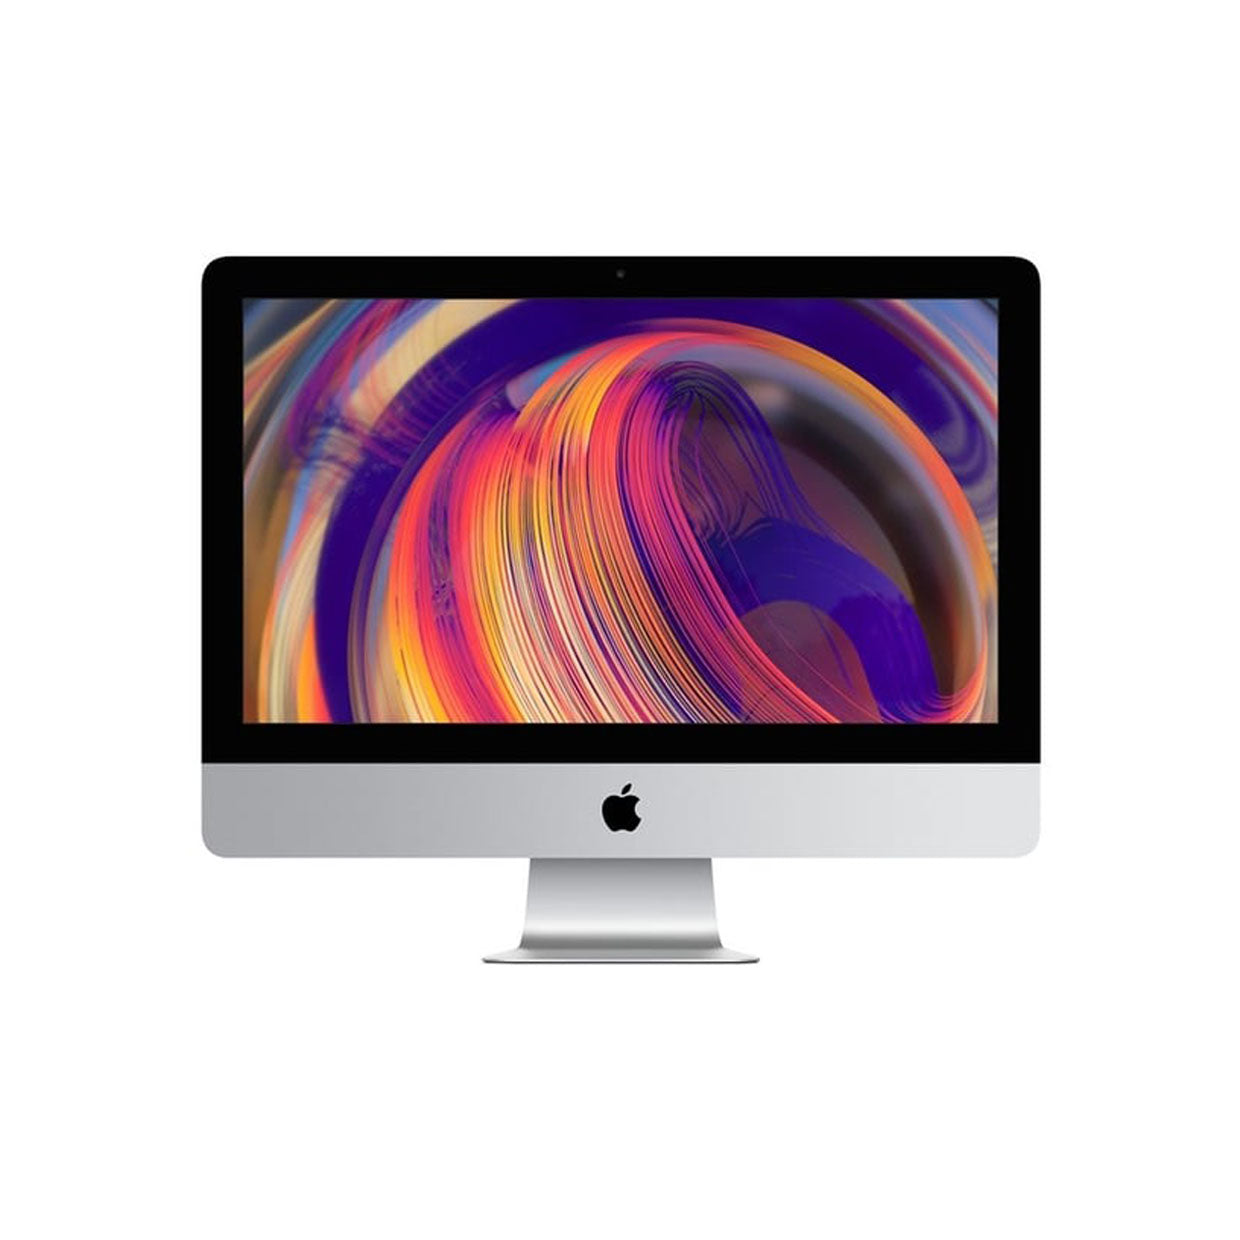 Prix Apple iMac 21.5 Retina 4K Intel Core i5 MK452FN/A 1 To Tunisie